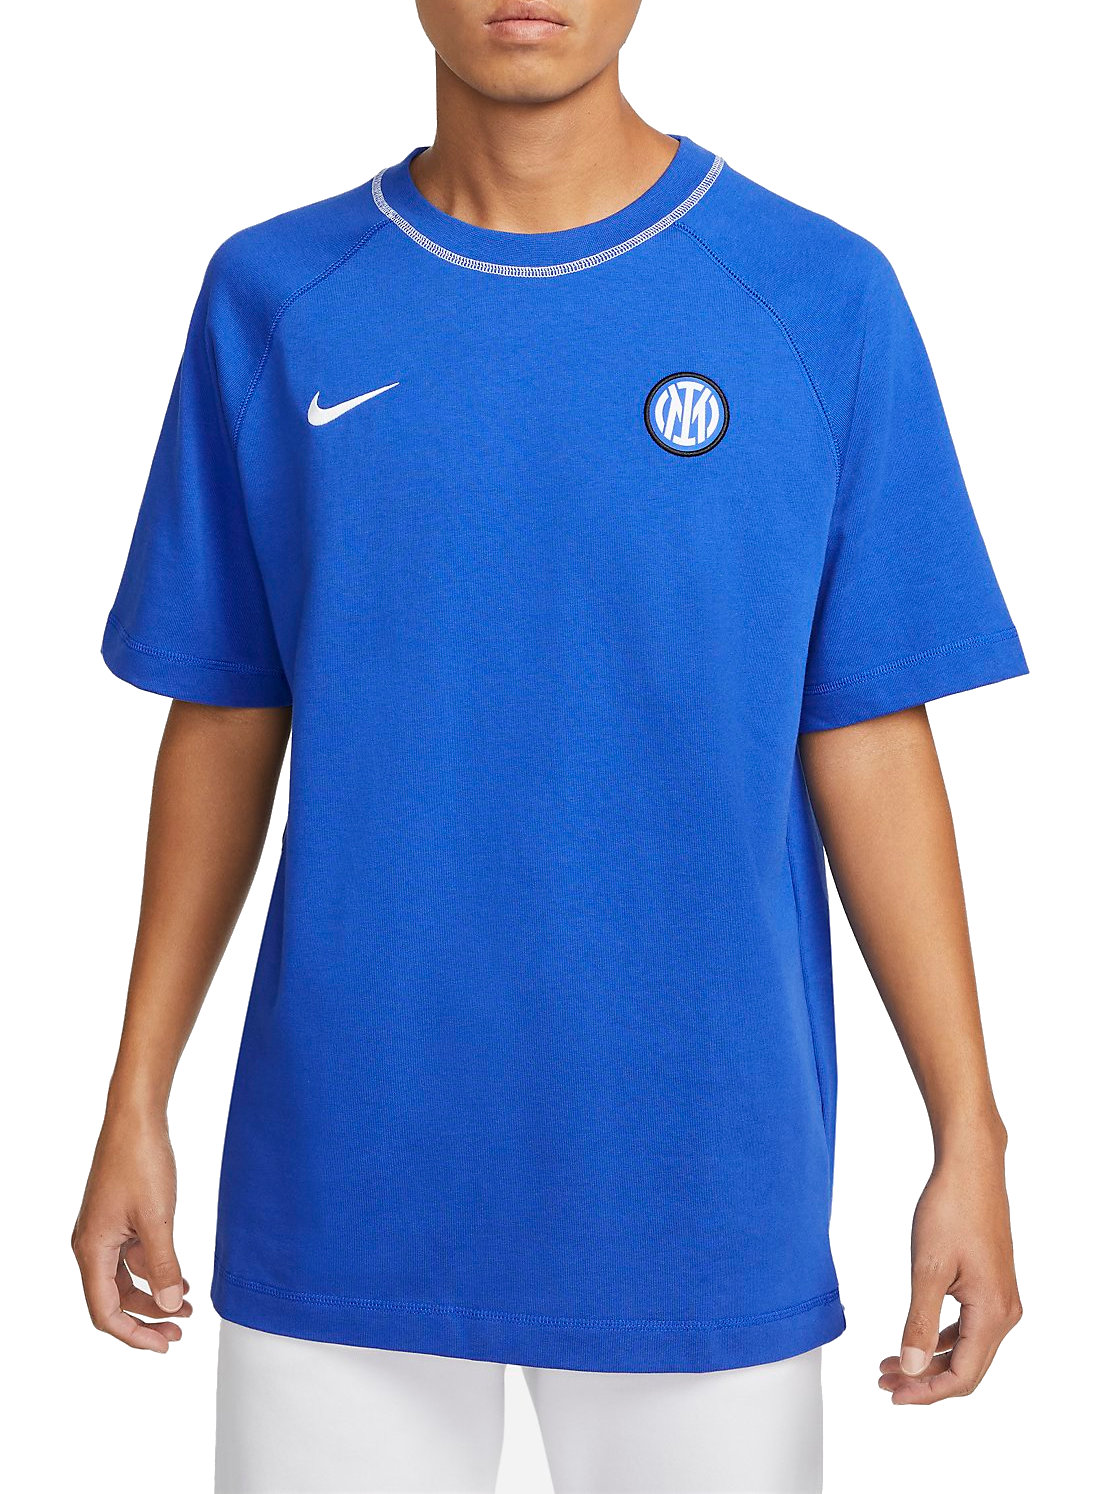 Tee-shirt Nike Inter Milan Travel Men's Short-Sleeve Football Top